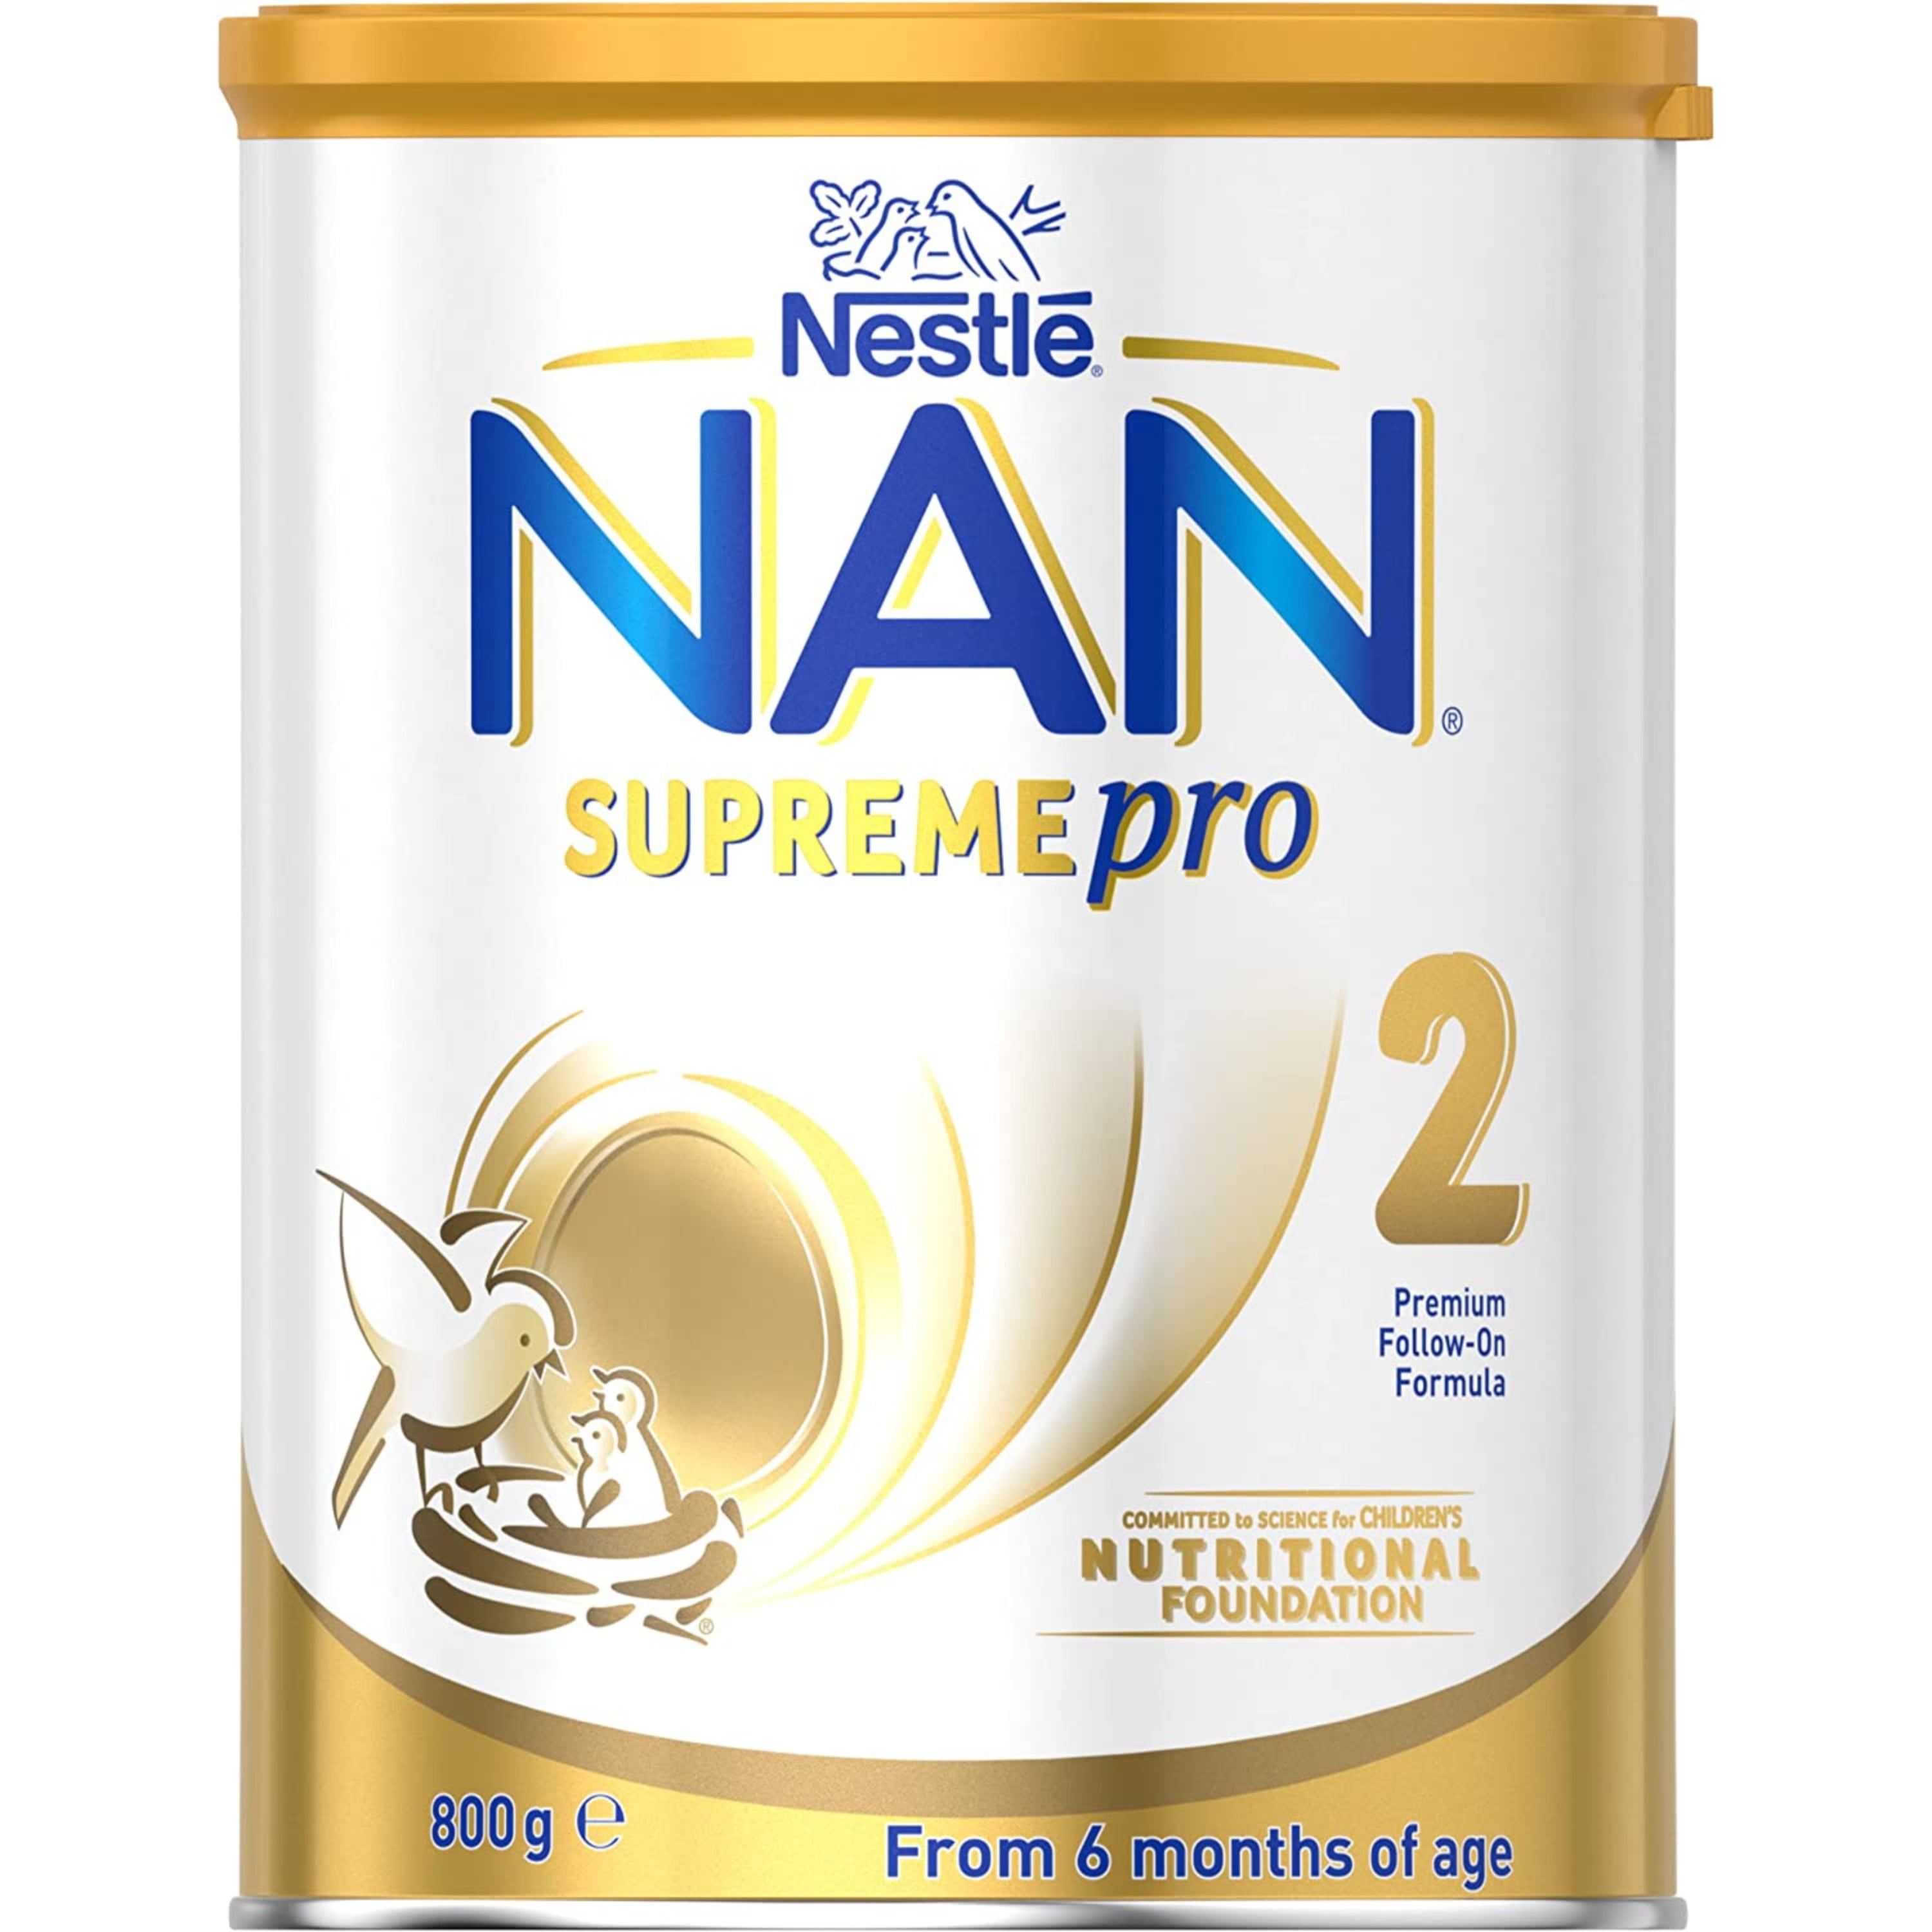 Comprar Nestlé Nan Supreme Pro Online